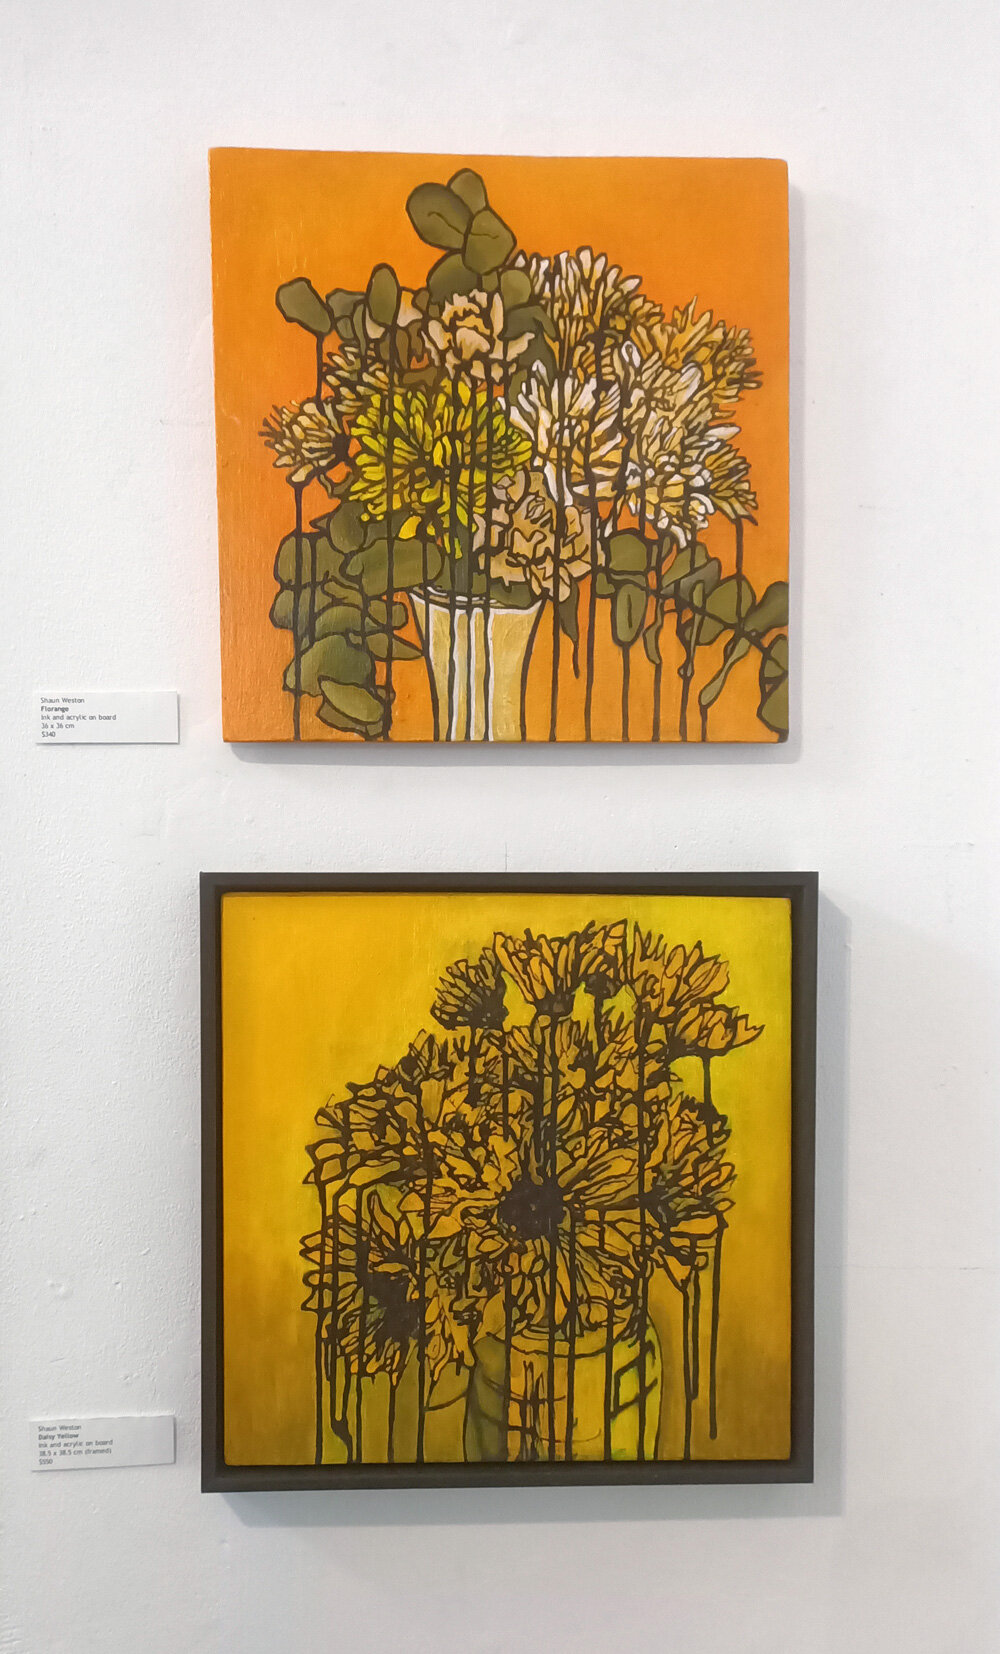   Florange , Ink and acrylic on board, 36 x 36 cm  Daisy Yellow, Ink and acrylic on board, 38.5 x 38.5 cm (framed) 